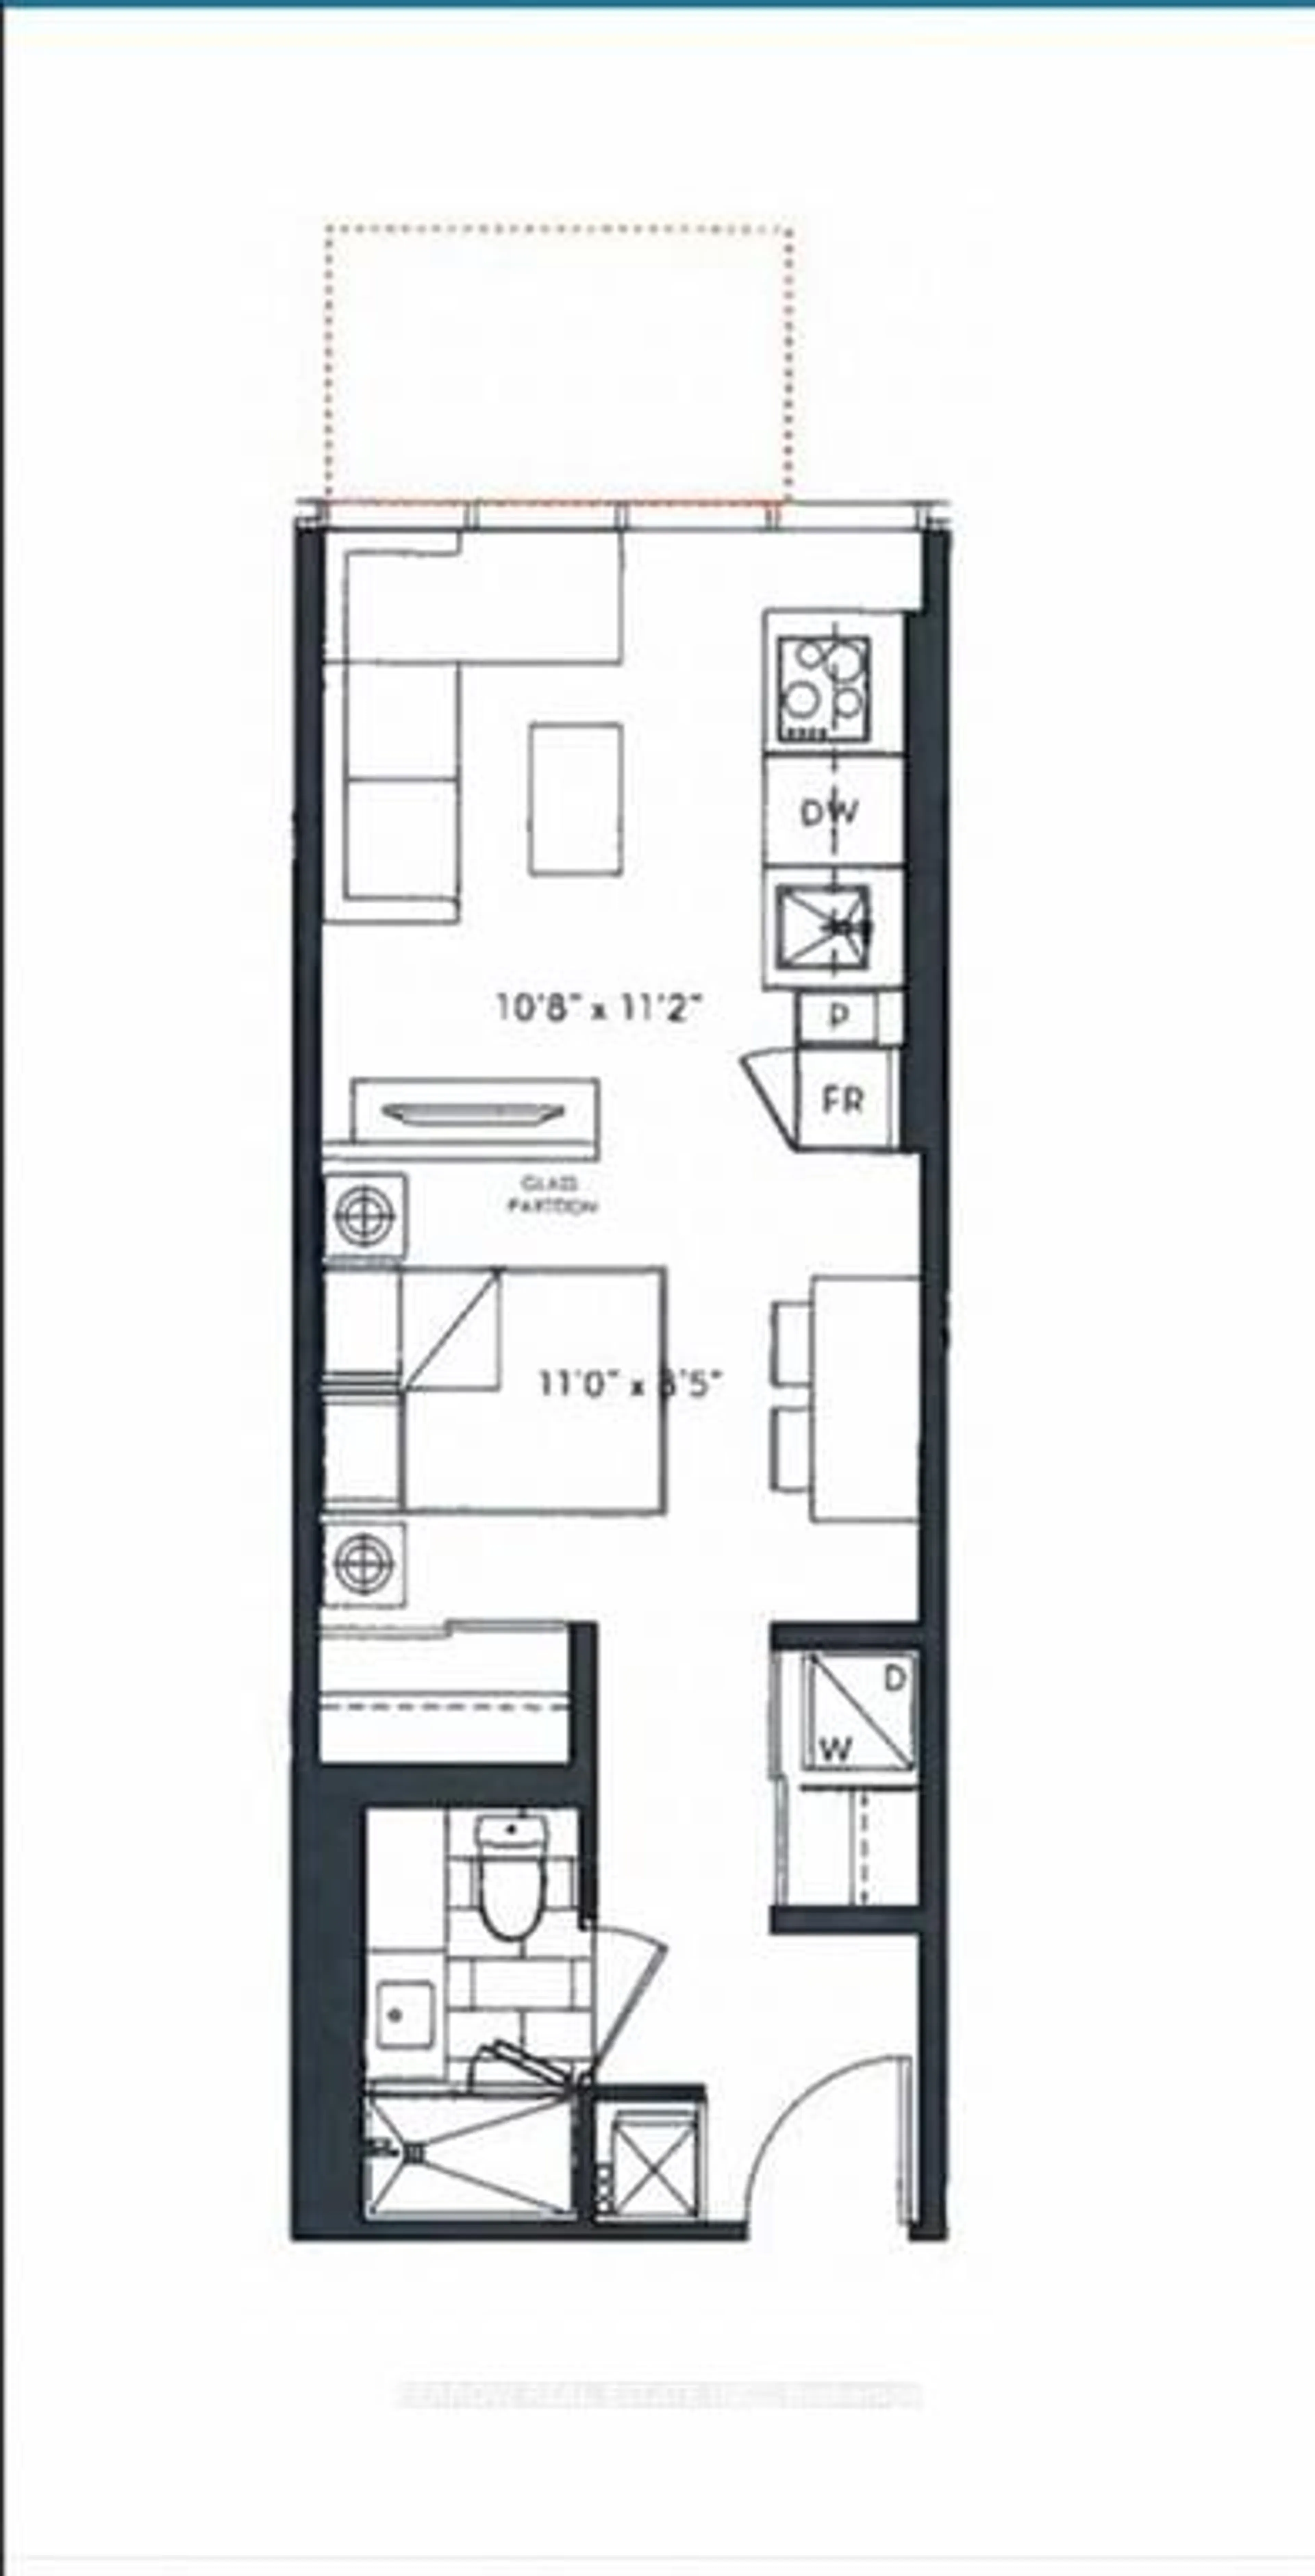 Floor plan for 77 Shuter St #2809, Toronto Ontario M5B 0B8